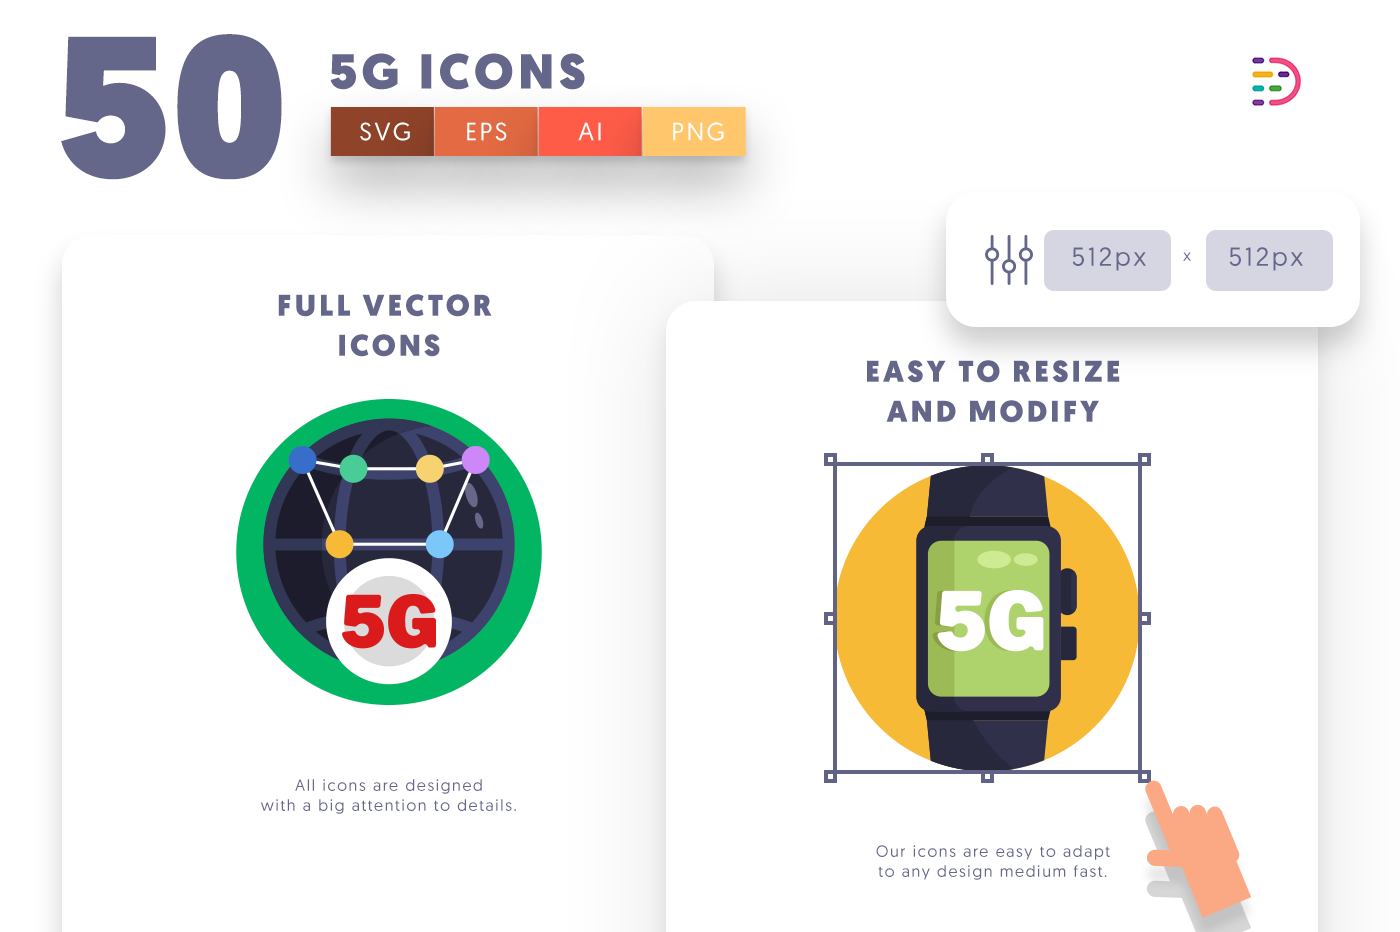 Full vector 505G Icons